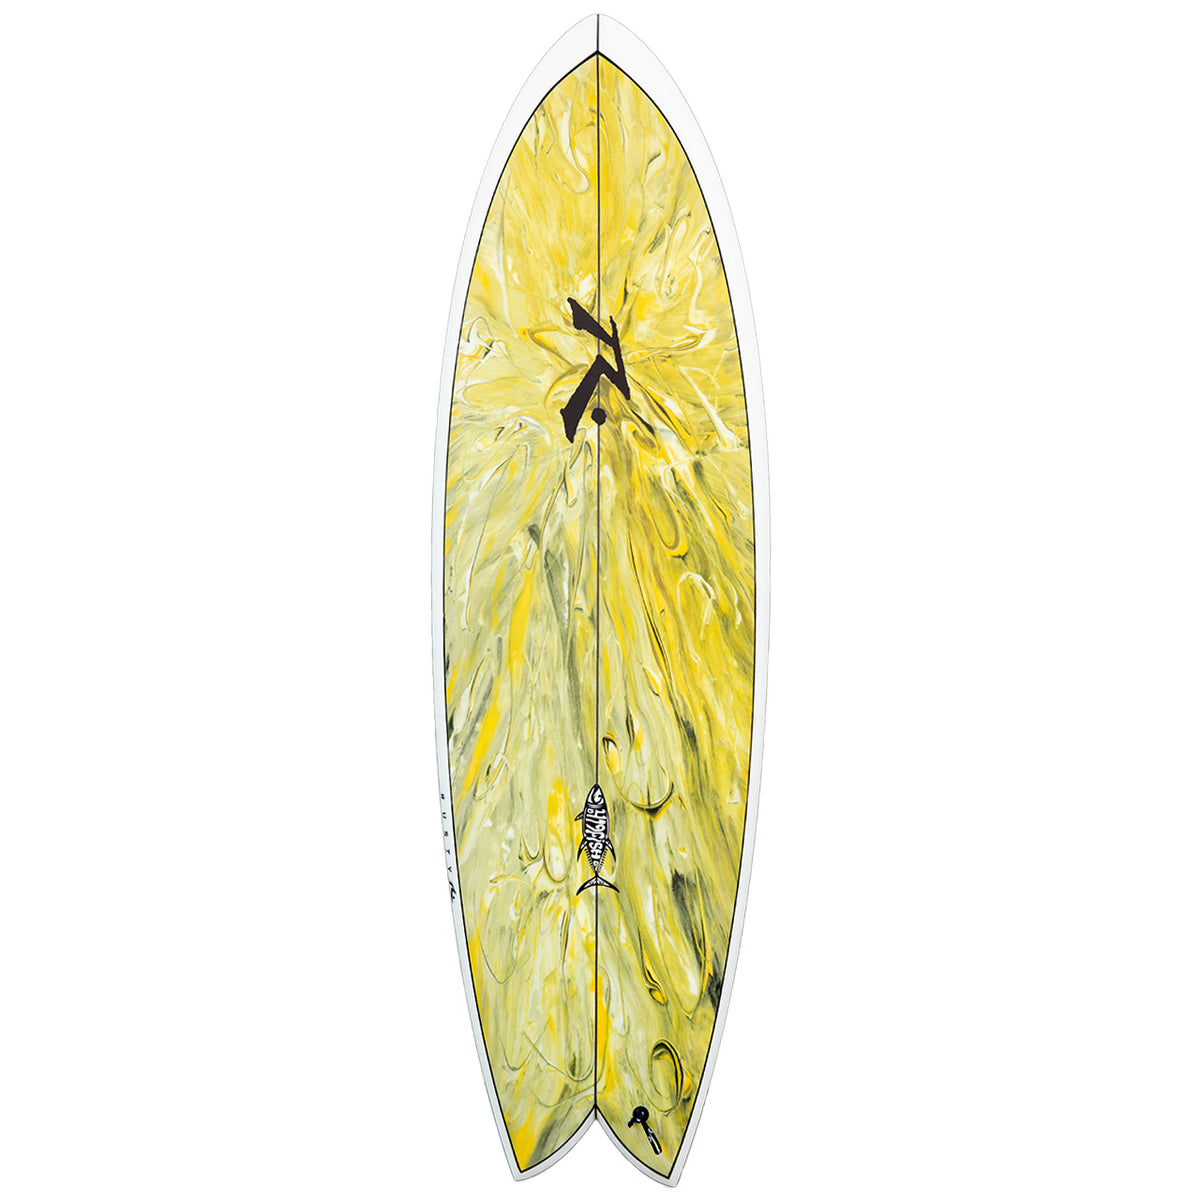 419fish - Alternative - Rusty Surfboards - Top View - Gold Yellow Swirl